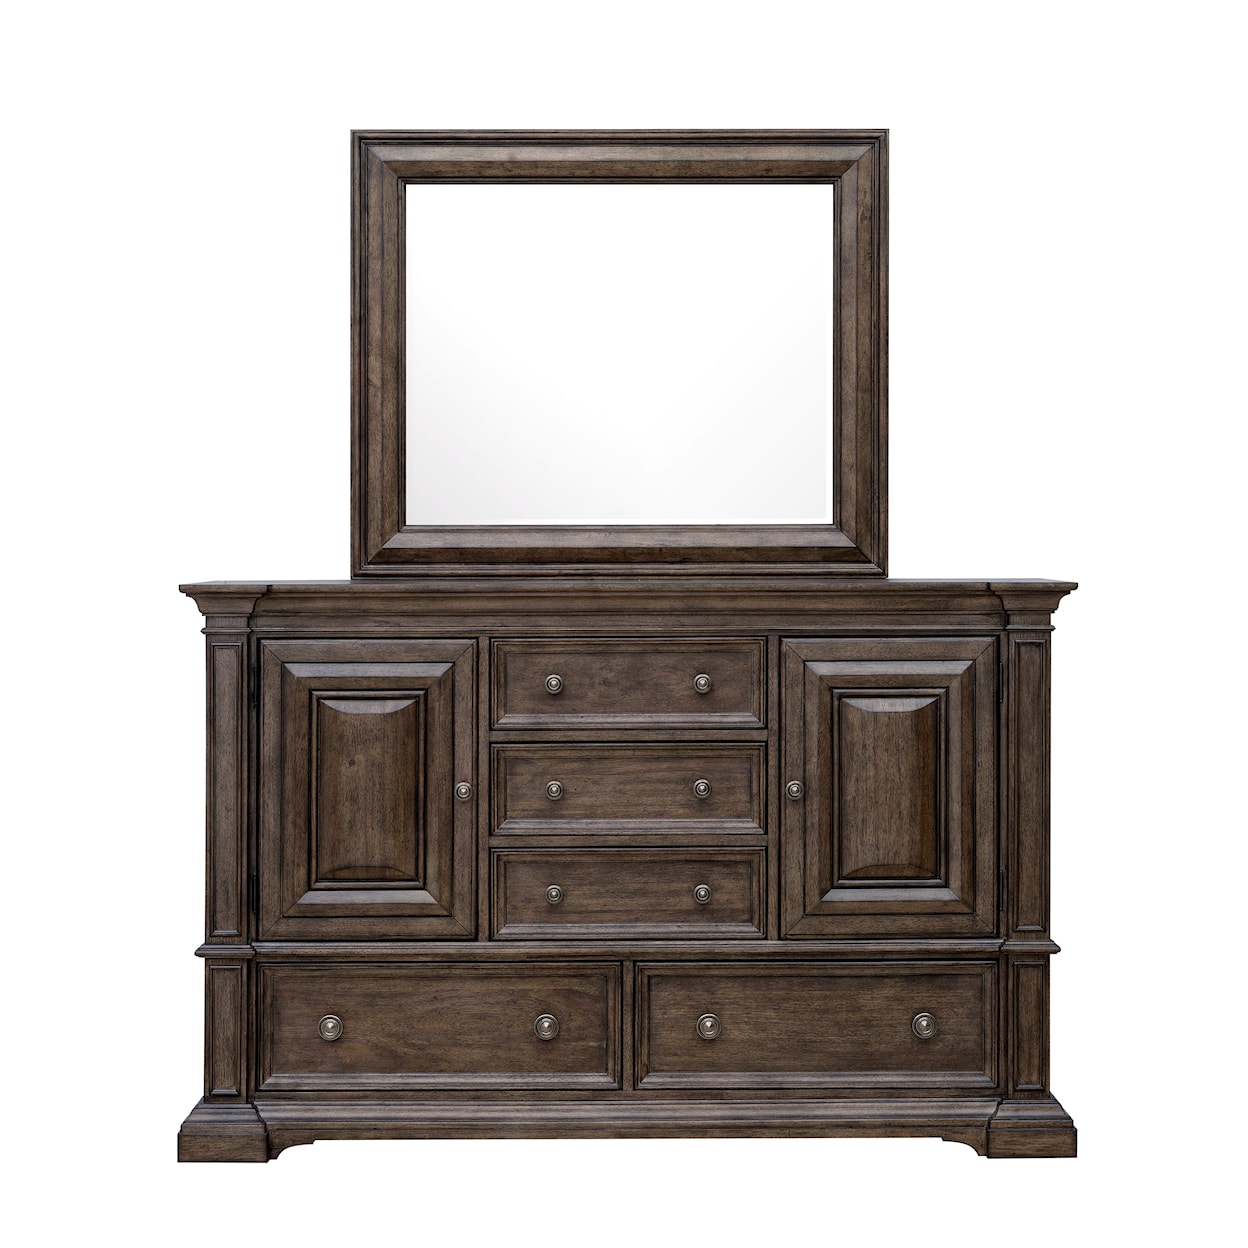 Pulaski Furniture Woodbury 5-Drawer Dresser